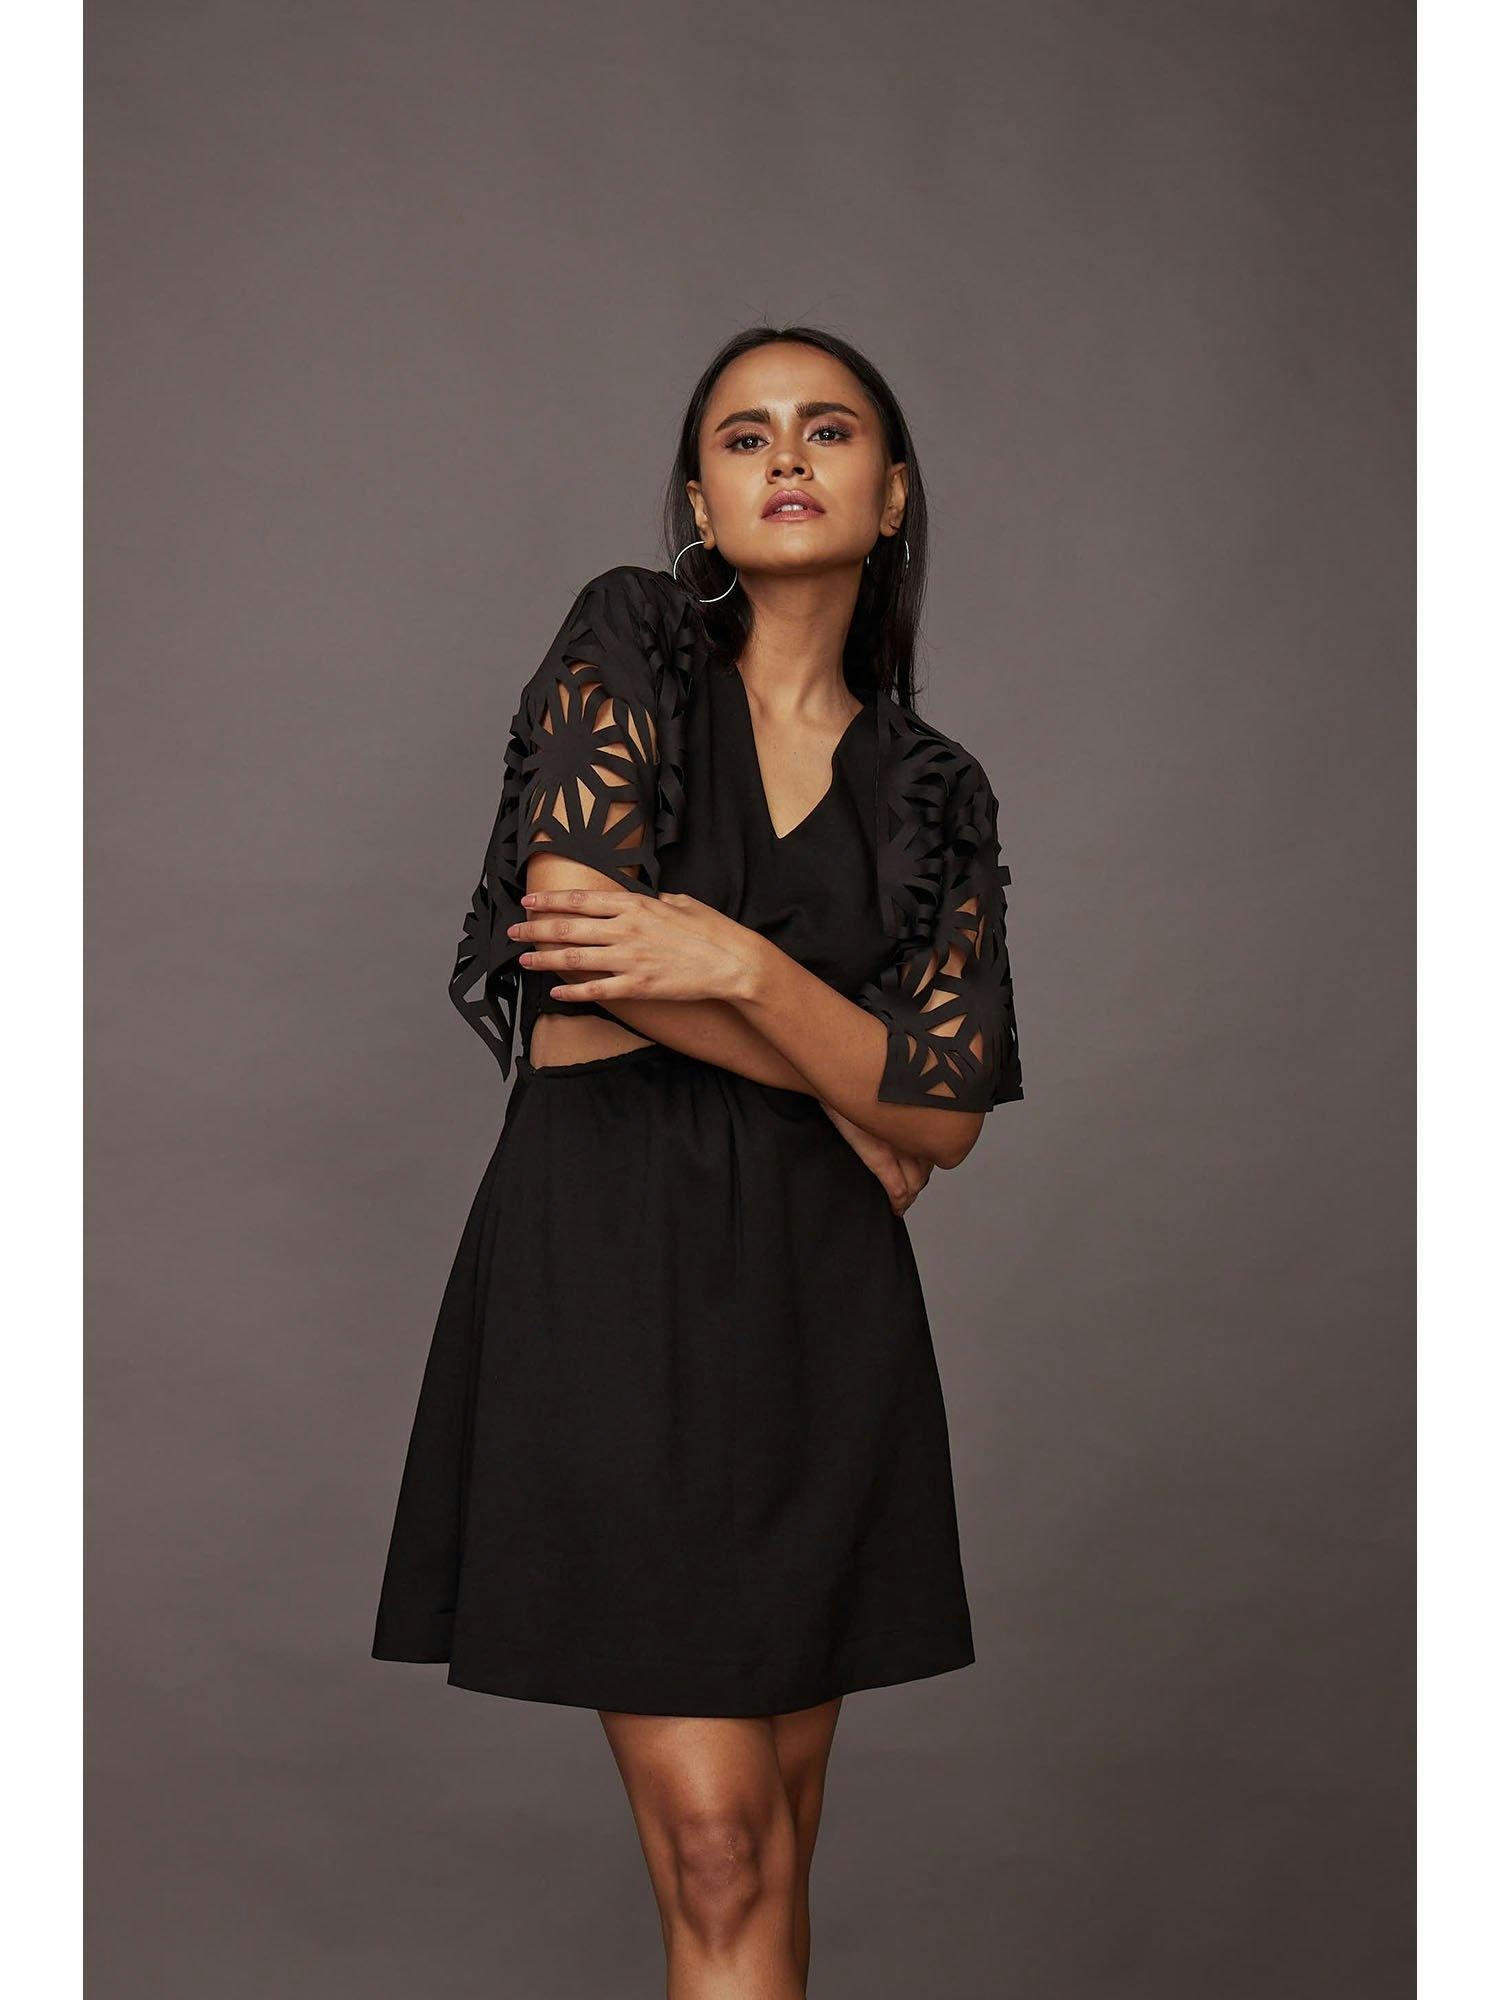 Black cutout dress with cutwork, a product by Deepika Arora